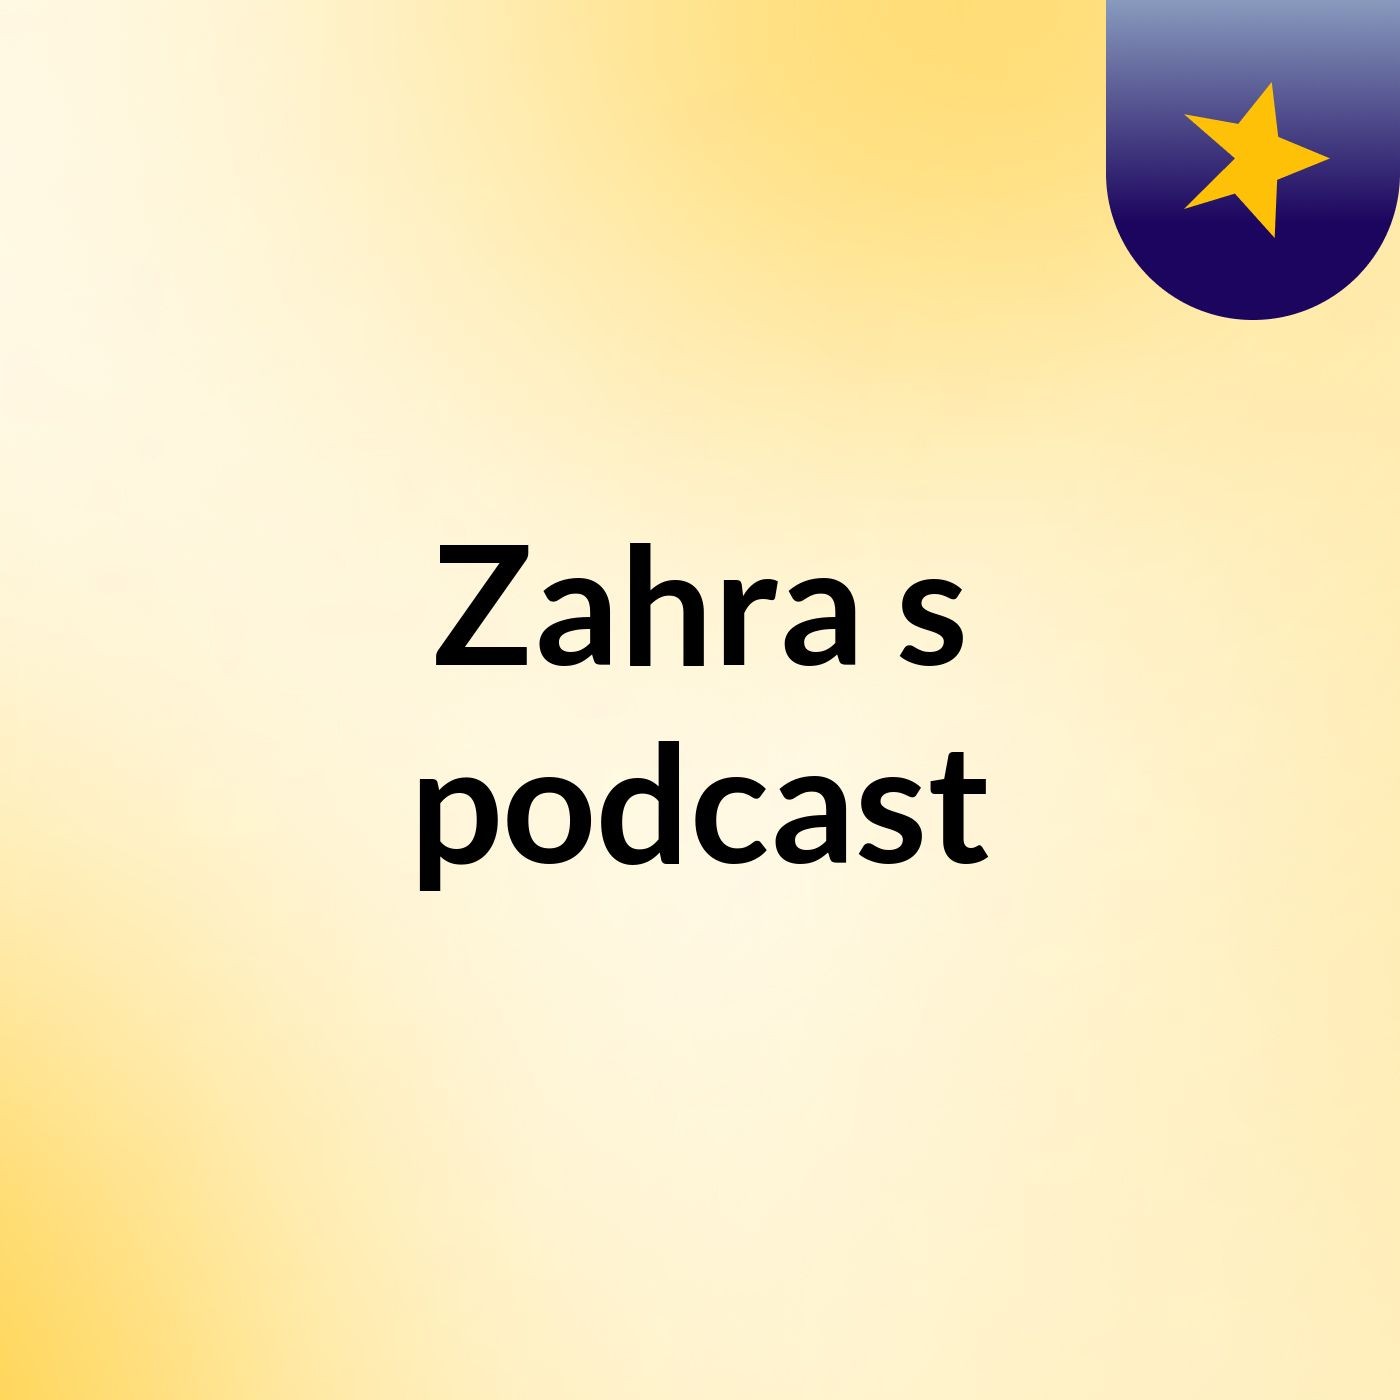 Episode 2 - Zahra's podcast